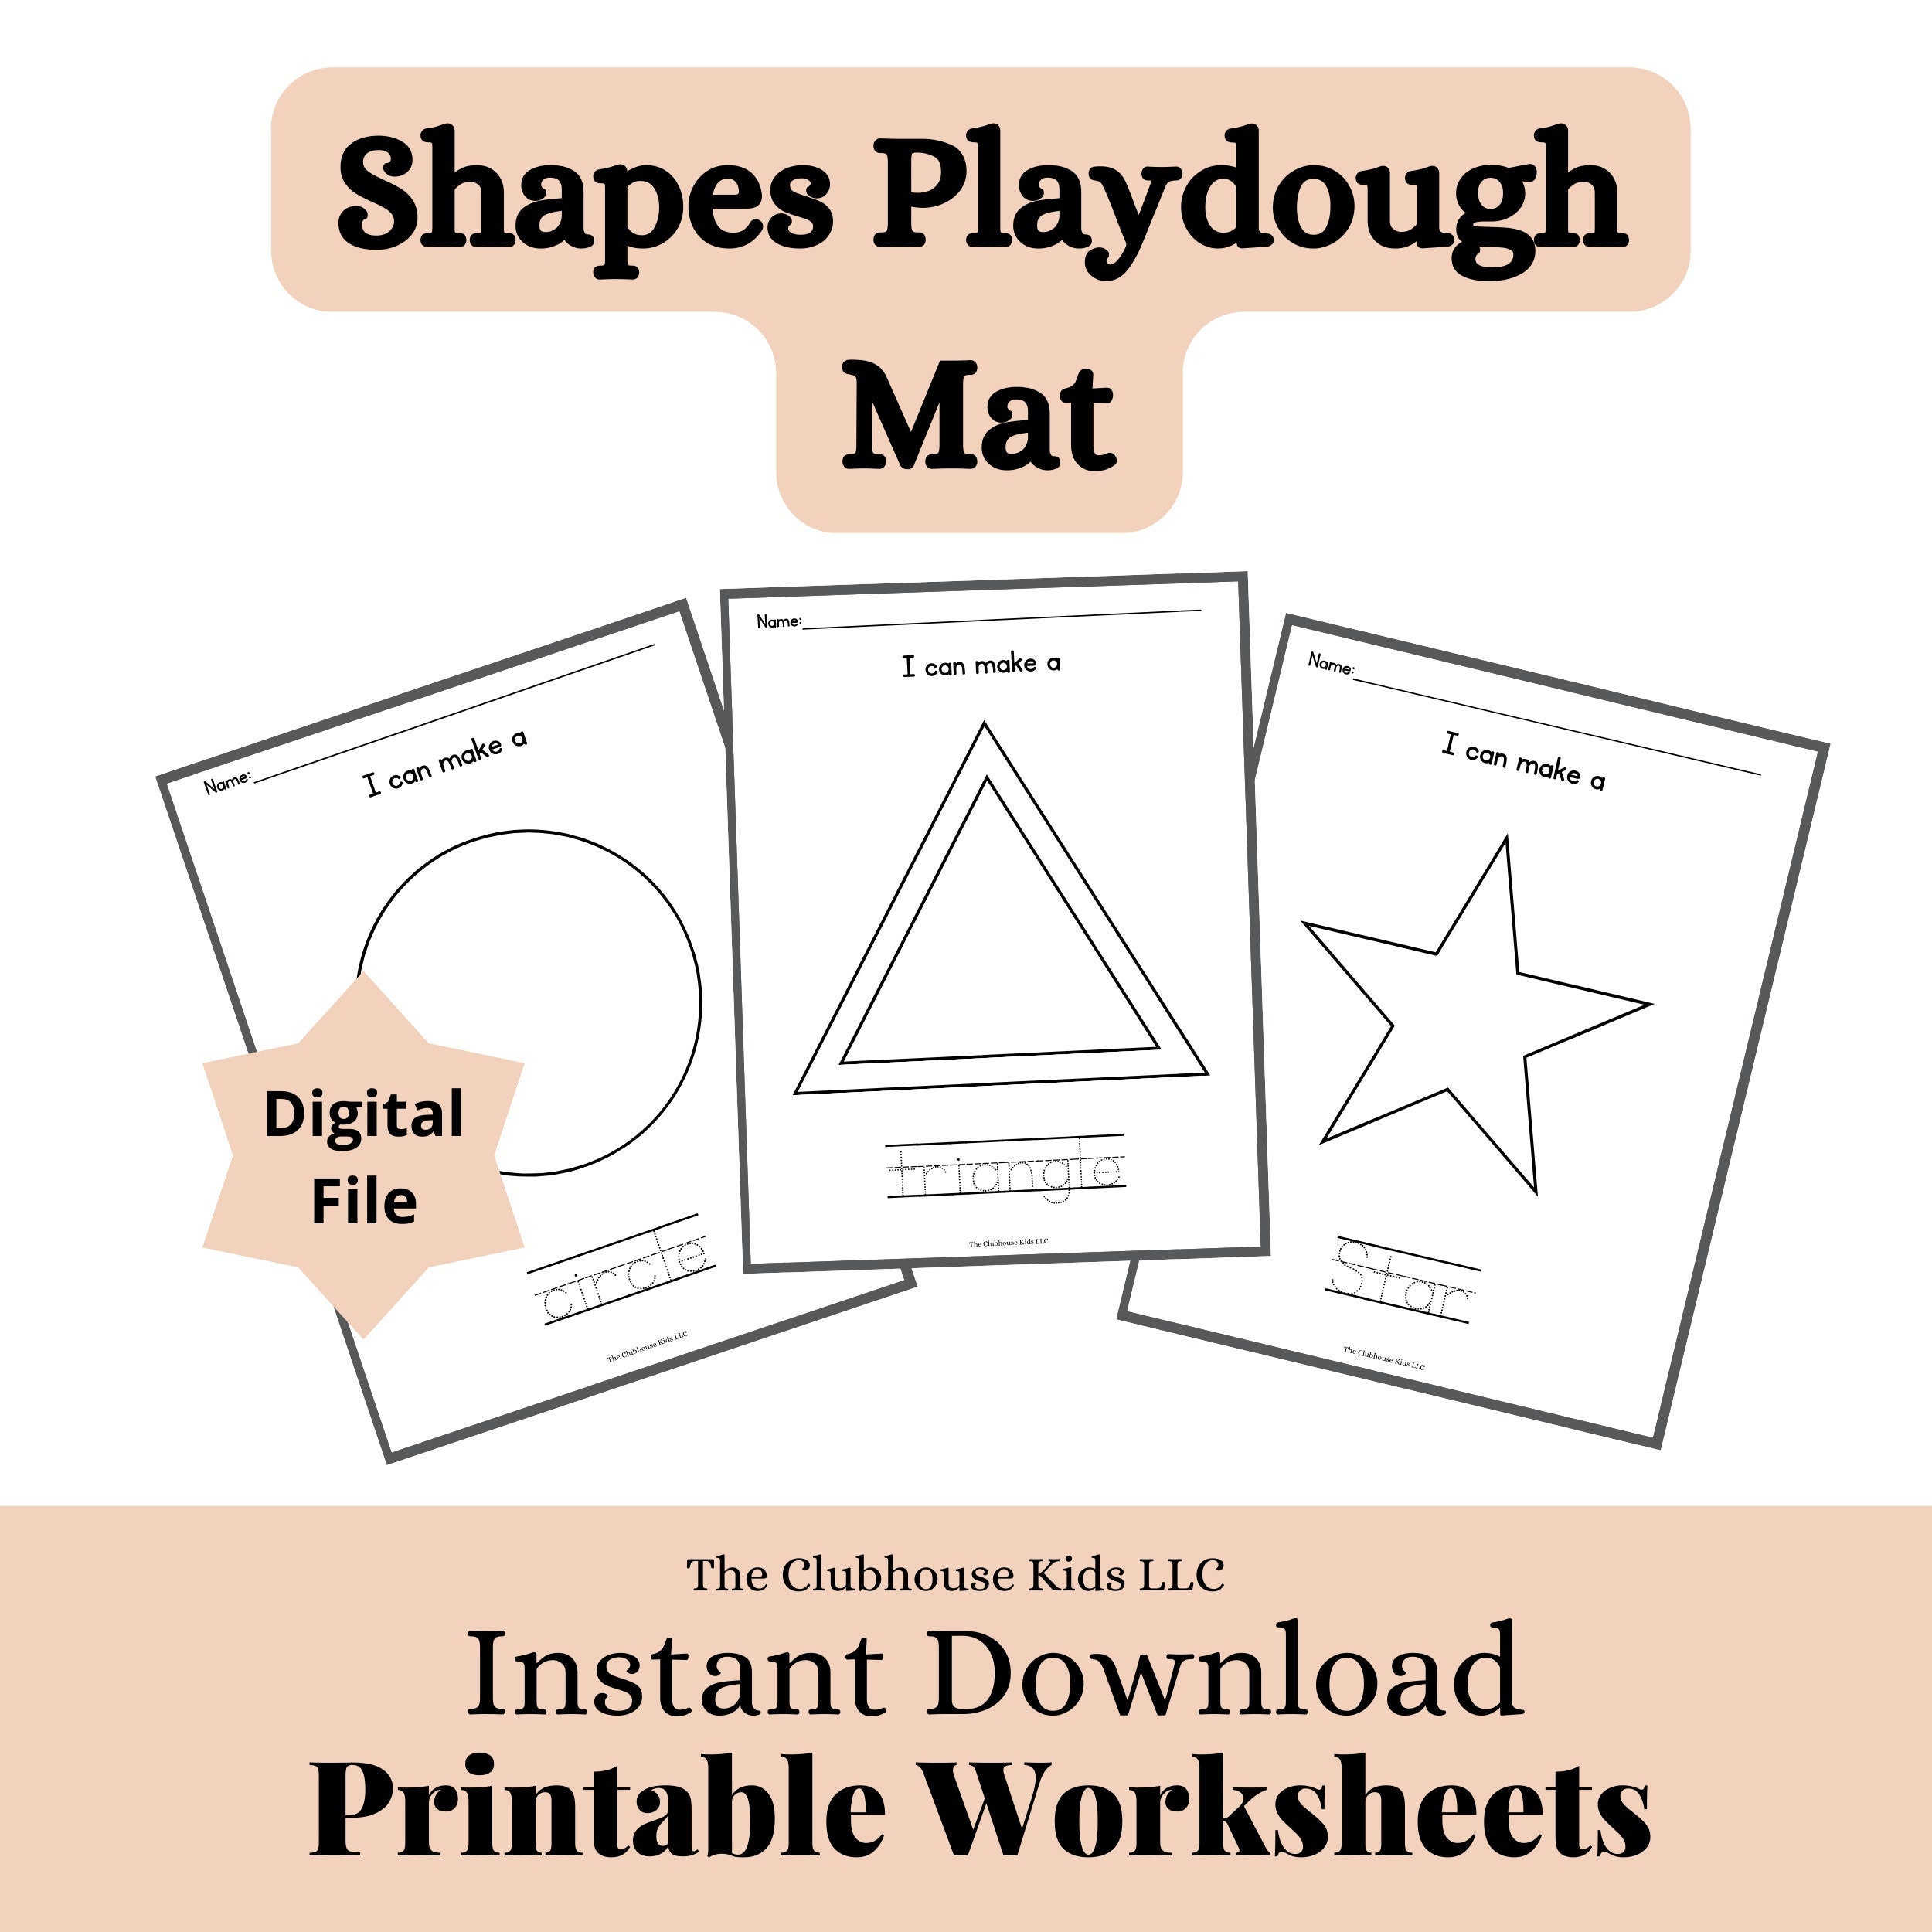 Play Dough Mats: Shapes - Printable